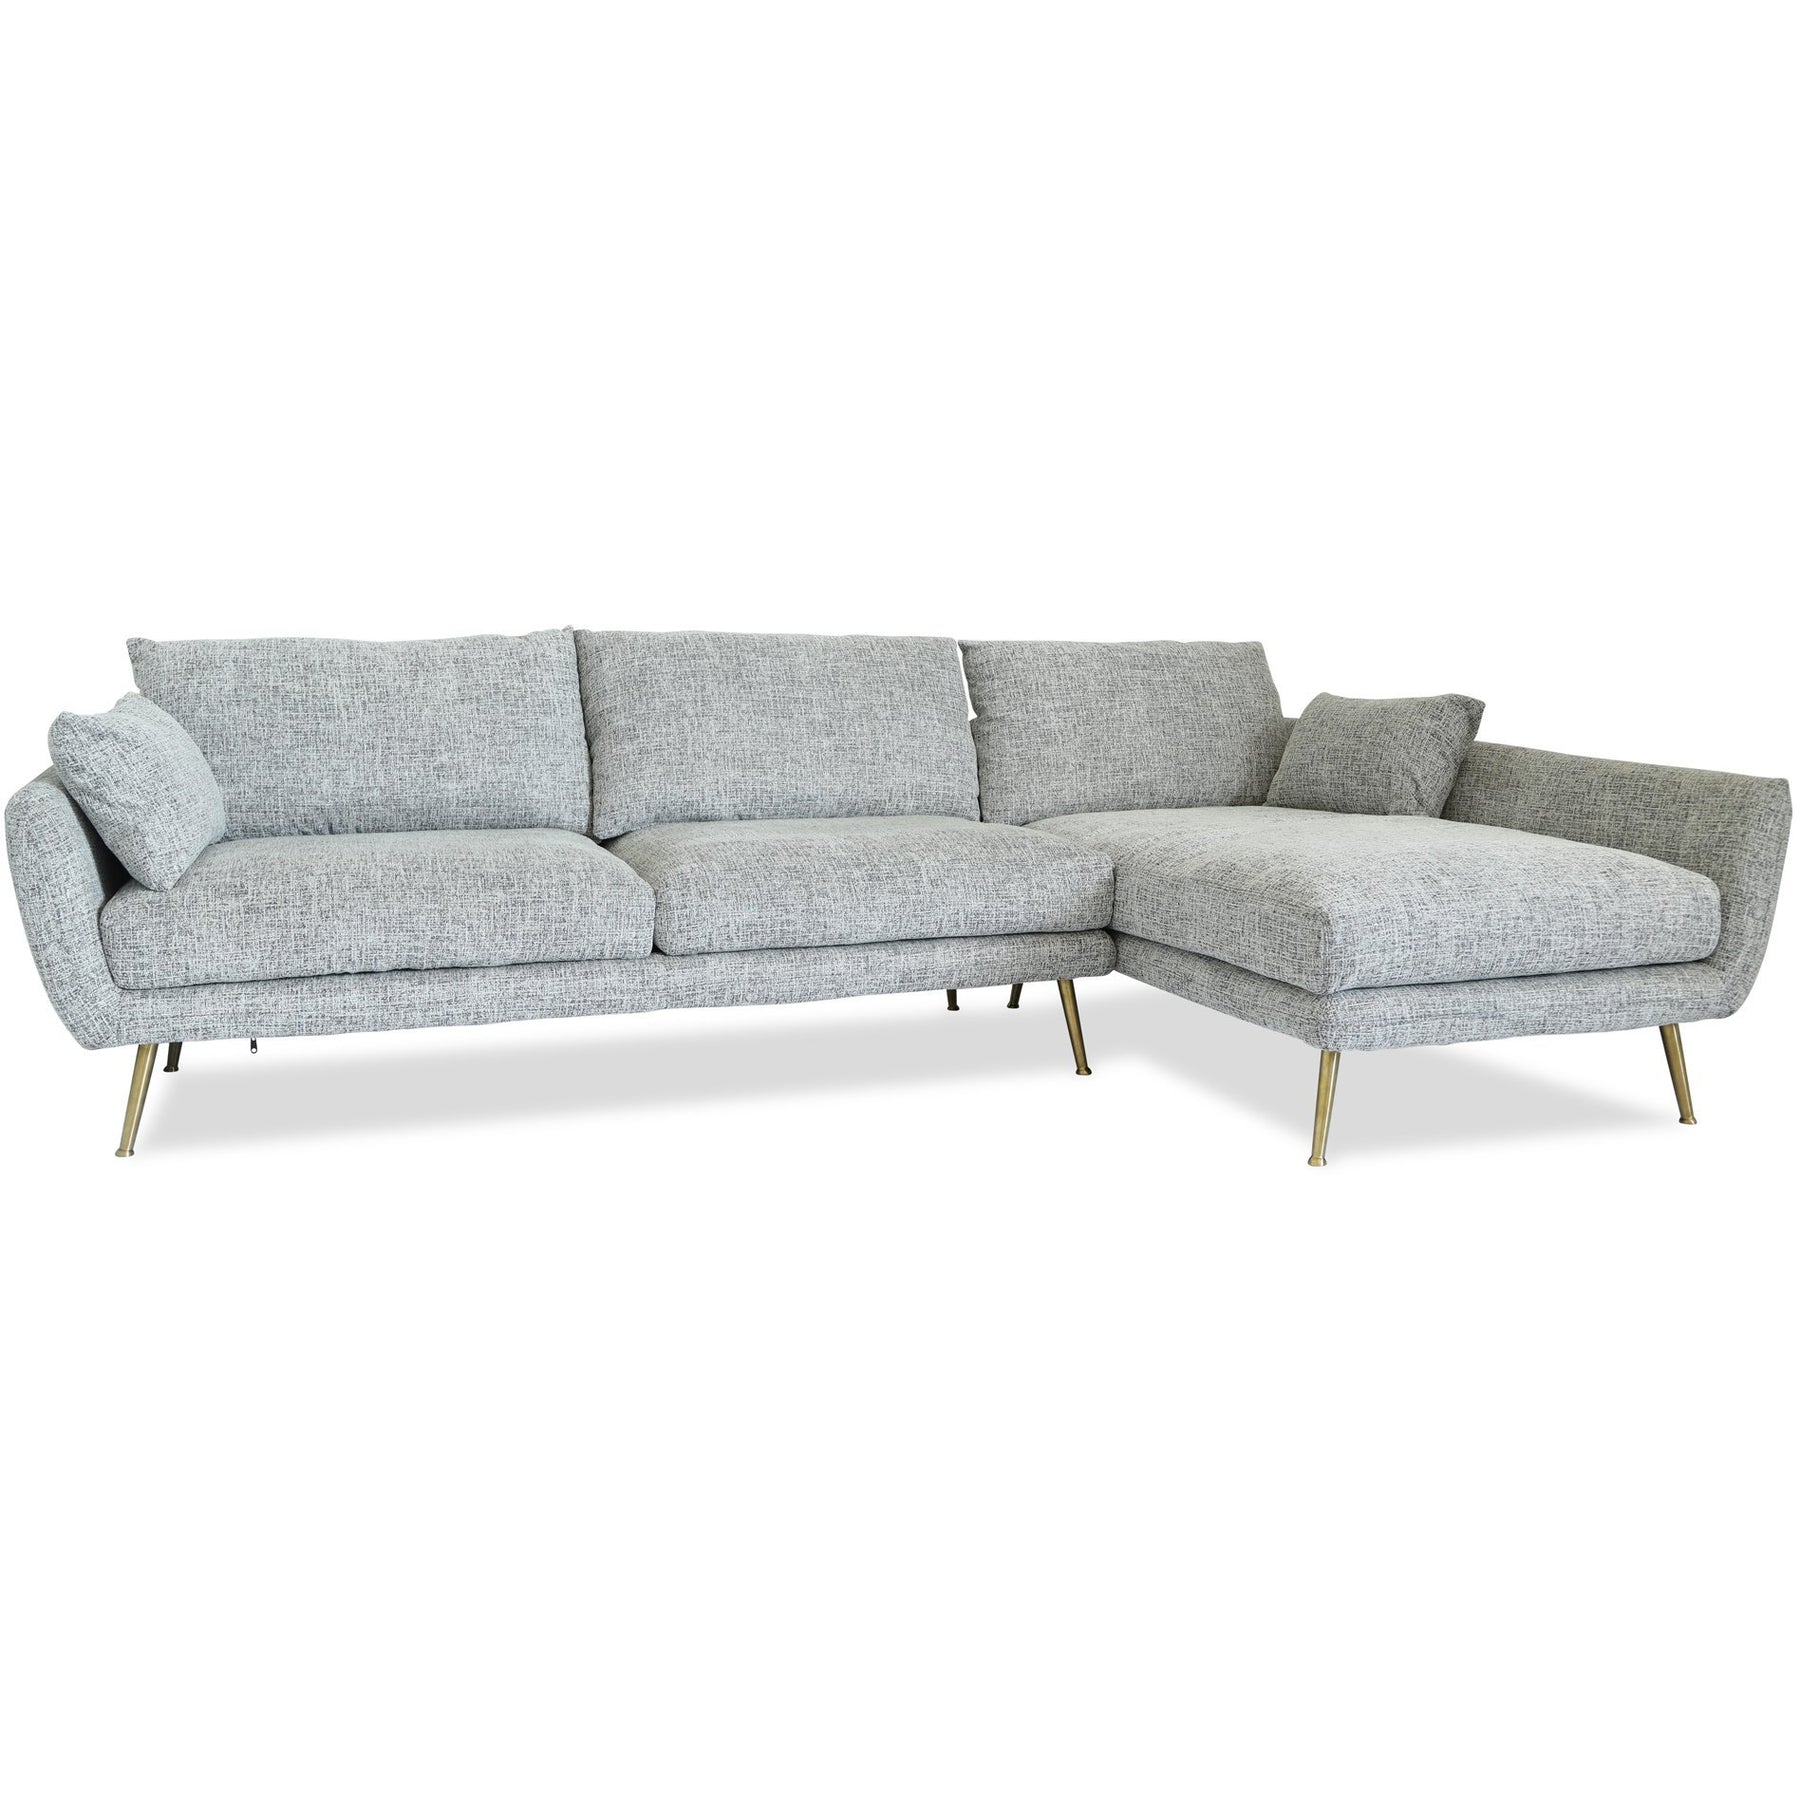 Edloe Finch Harlow Sectional Sofa, Right Facing